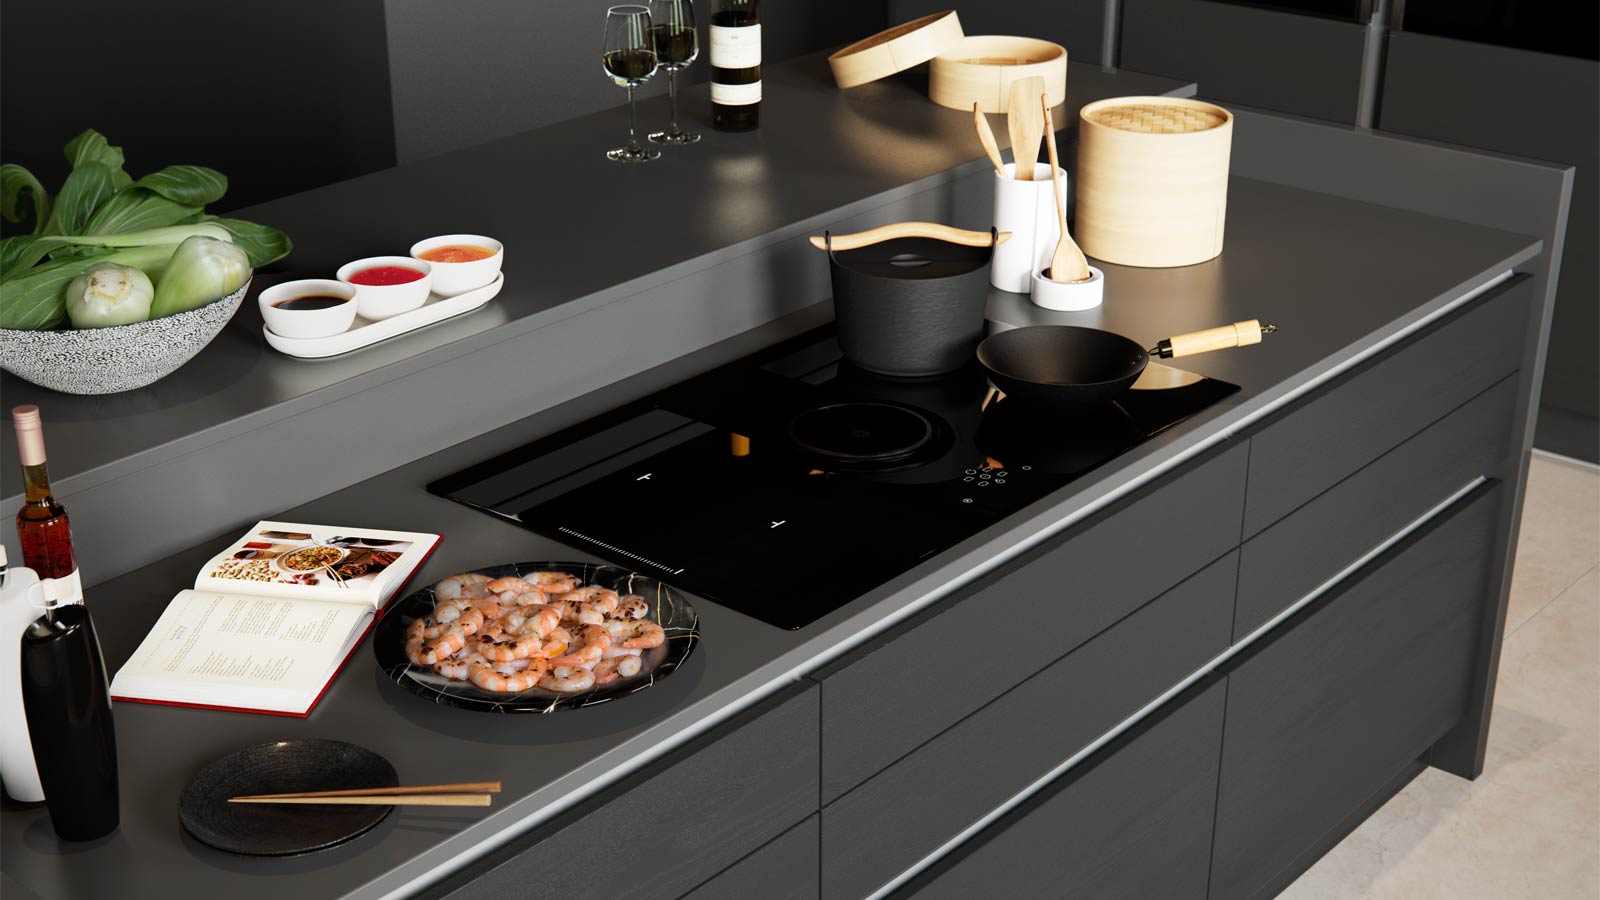 A handleless kitchen design with a true handleless kitchen and Japandi interior